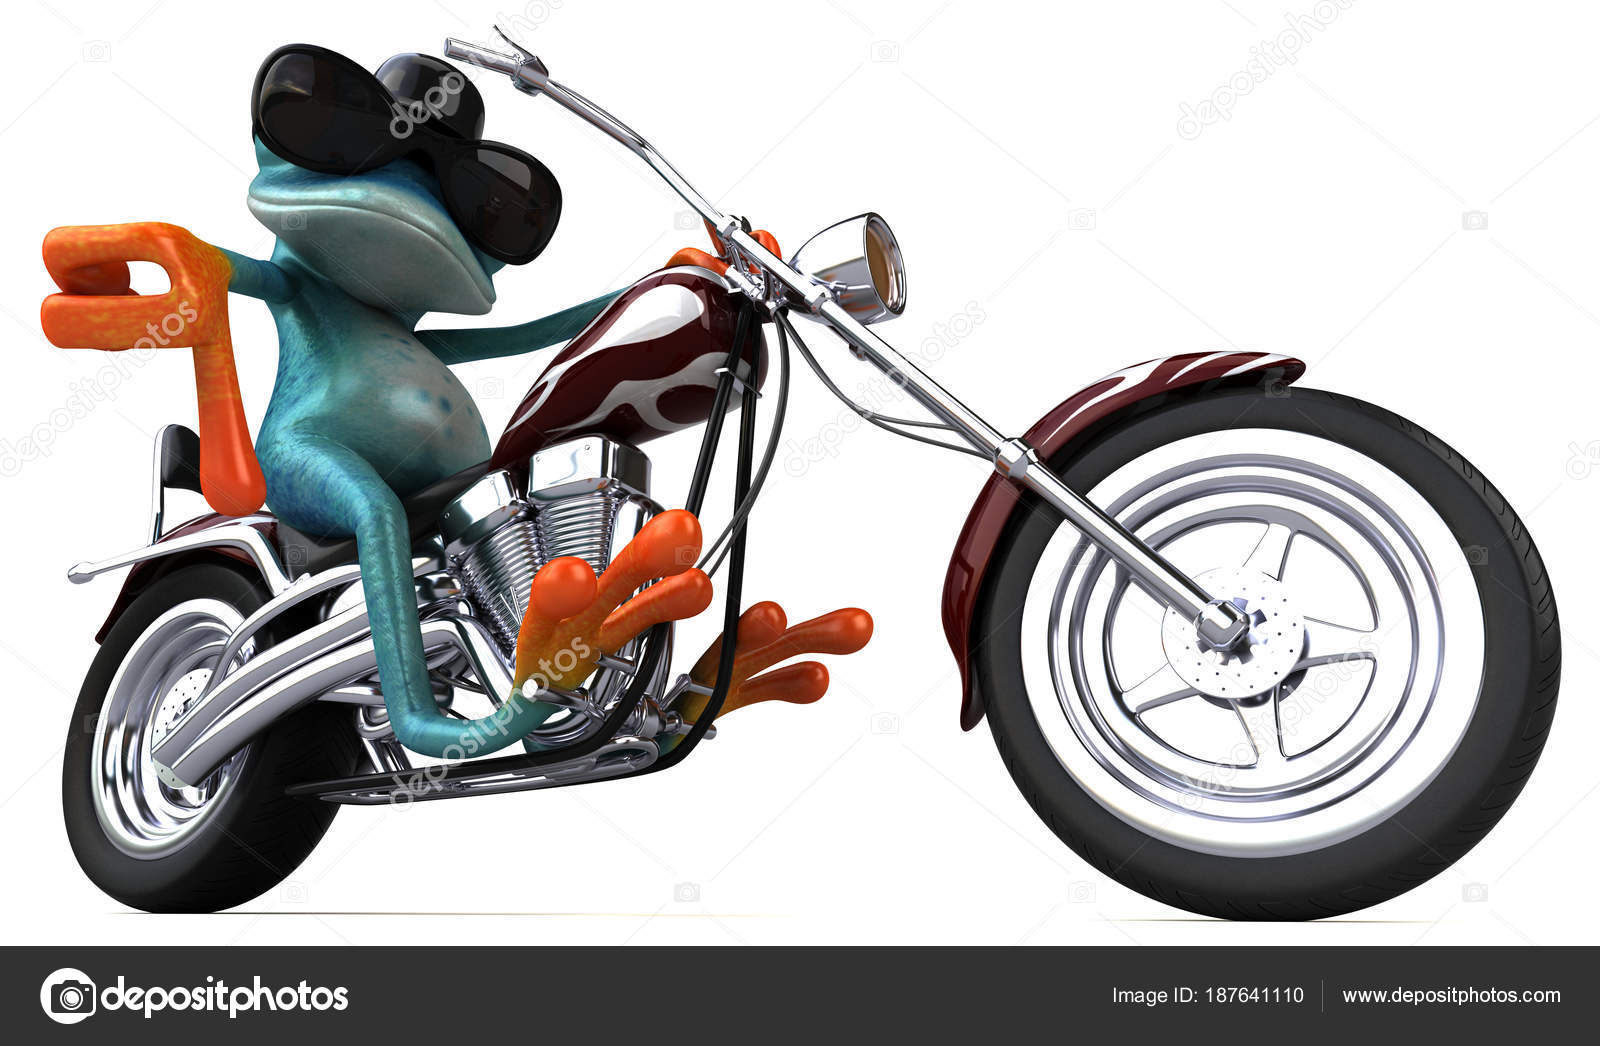 Funny Cartoon Character Motorbike Illustration Stock Photo by ©julos  187641110